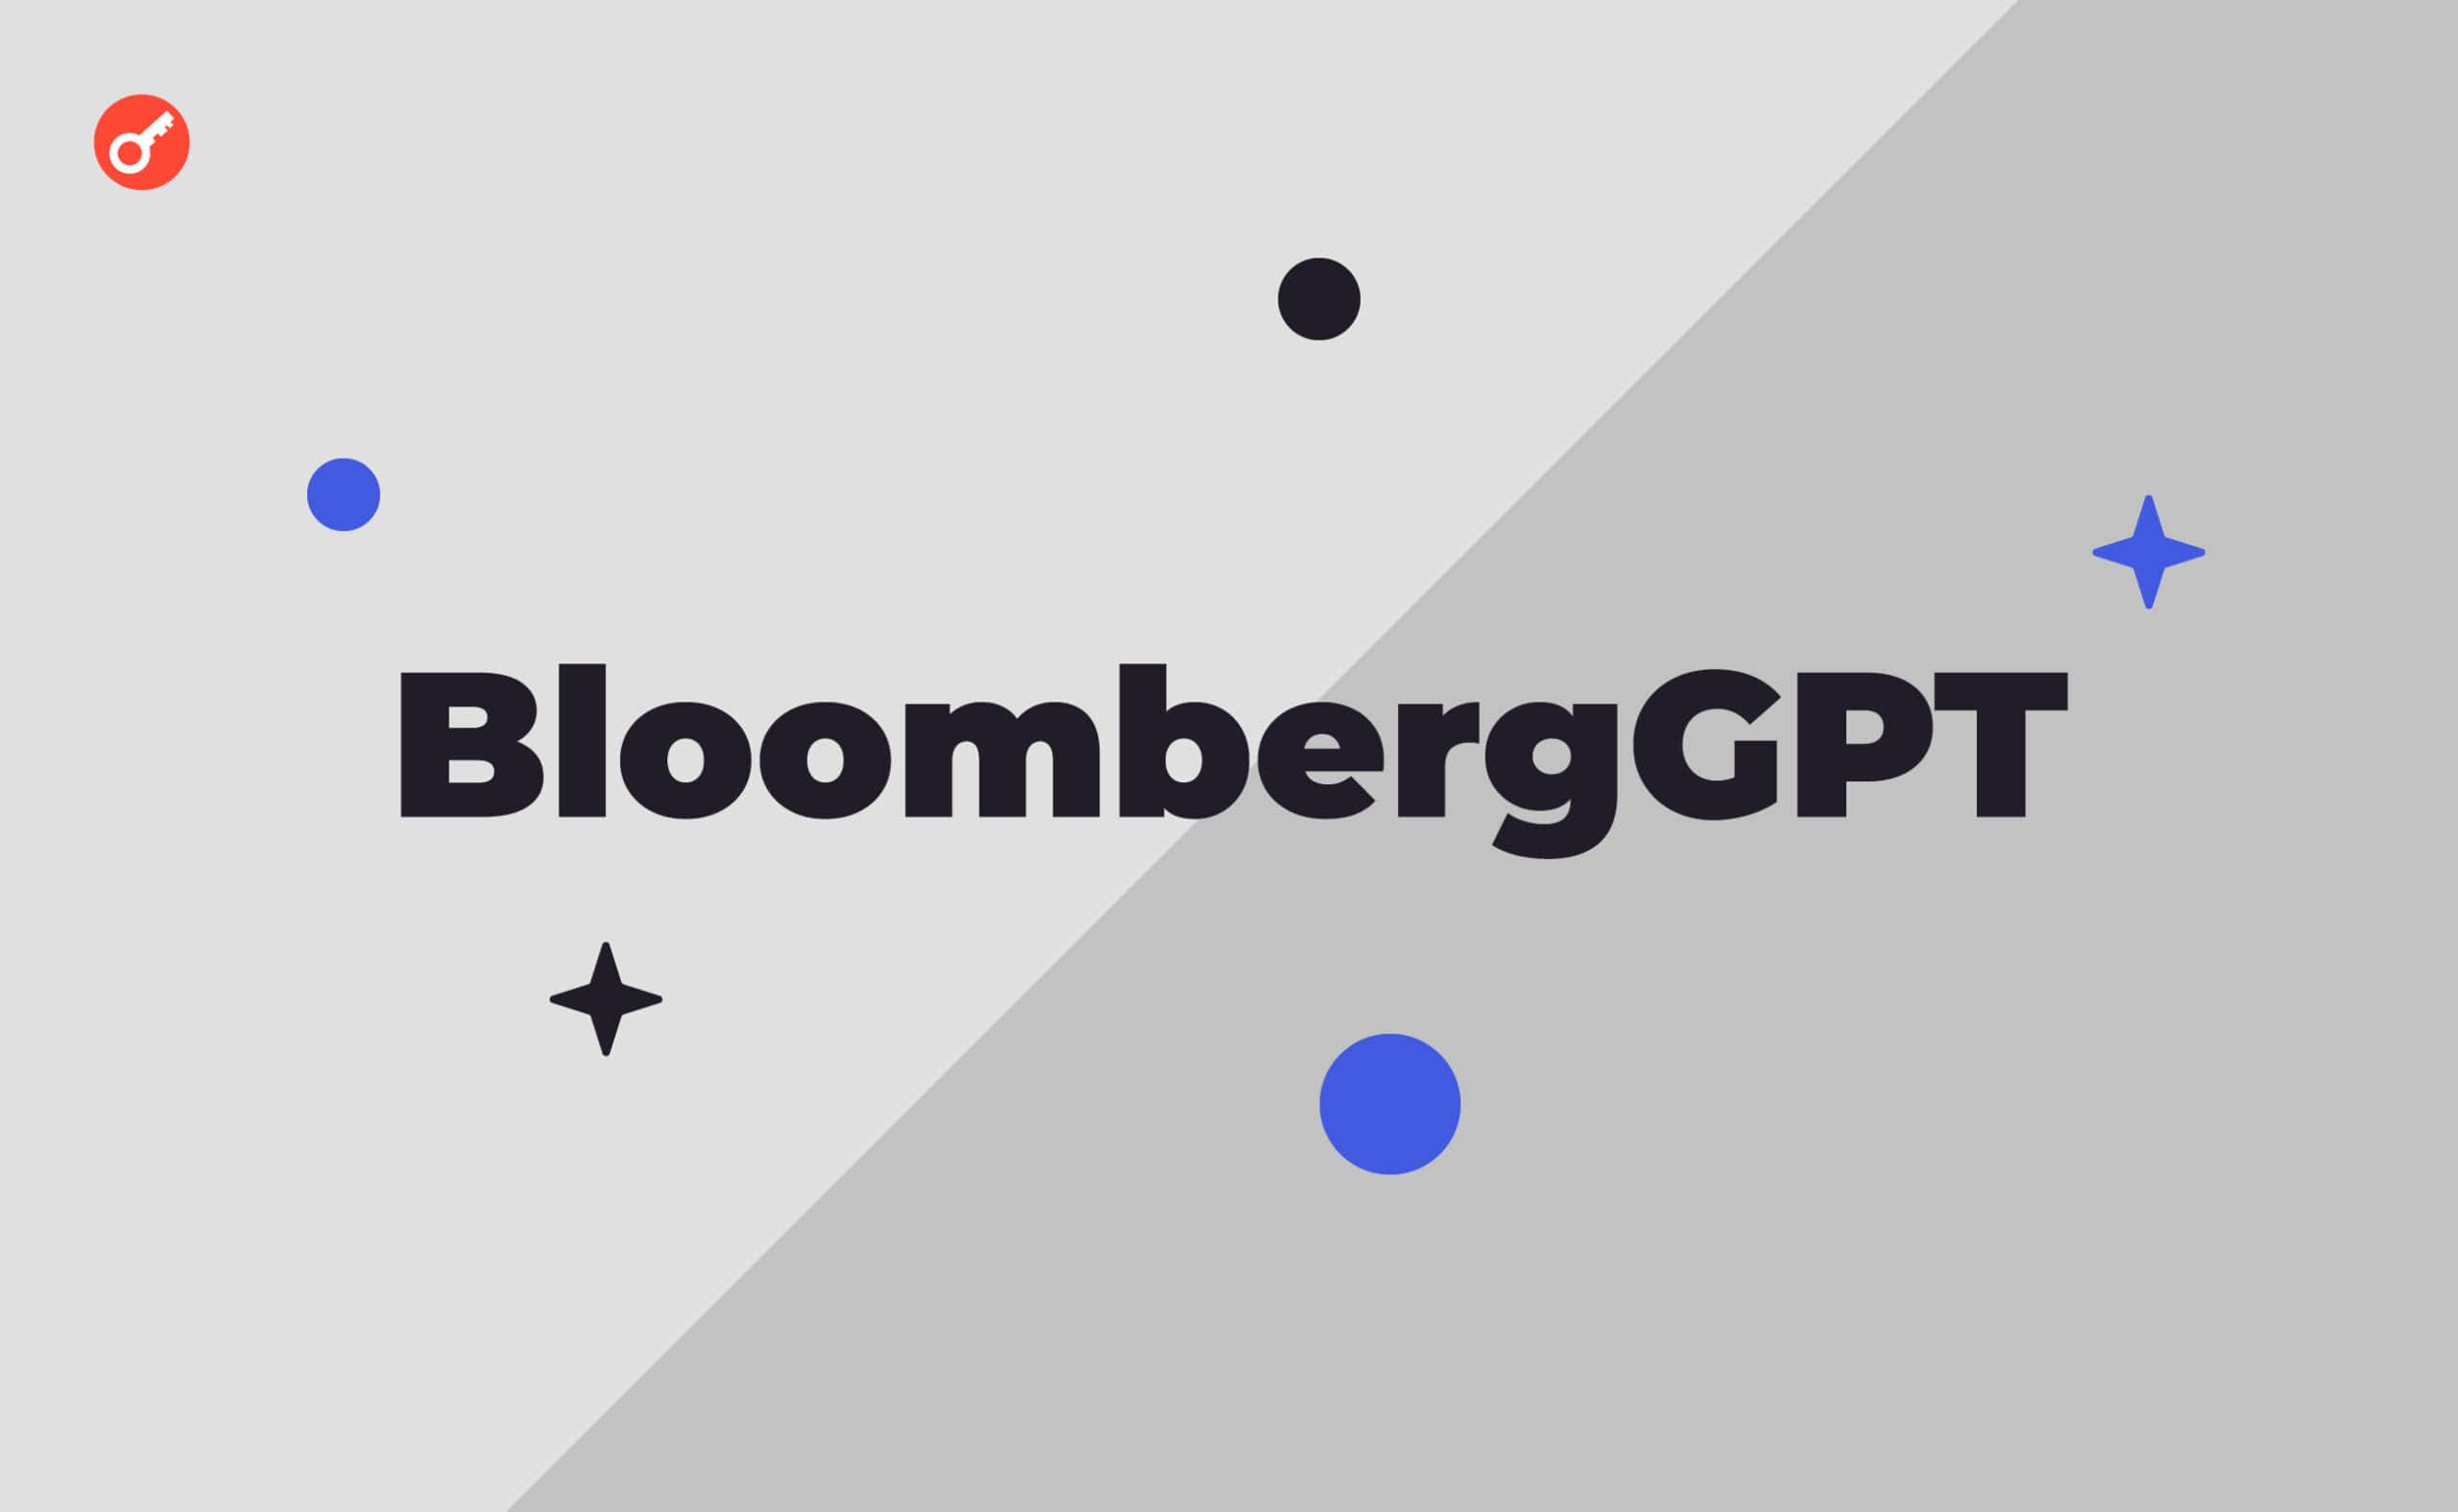 Bloomberg презентував нейромережу BloombergGPT. Головний колаж новини.